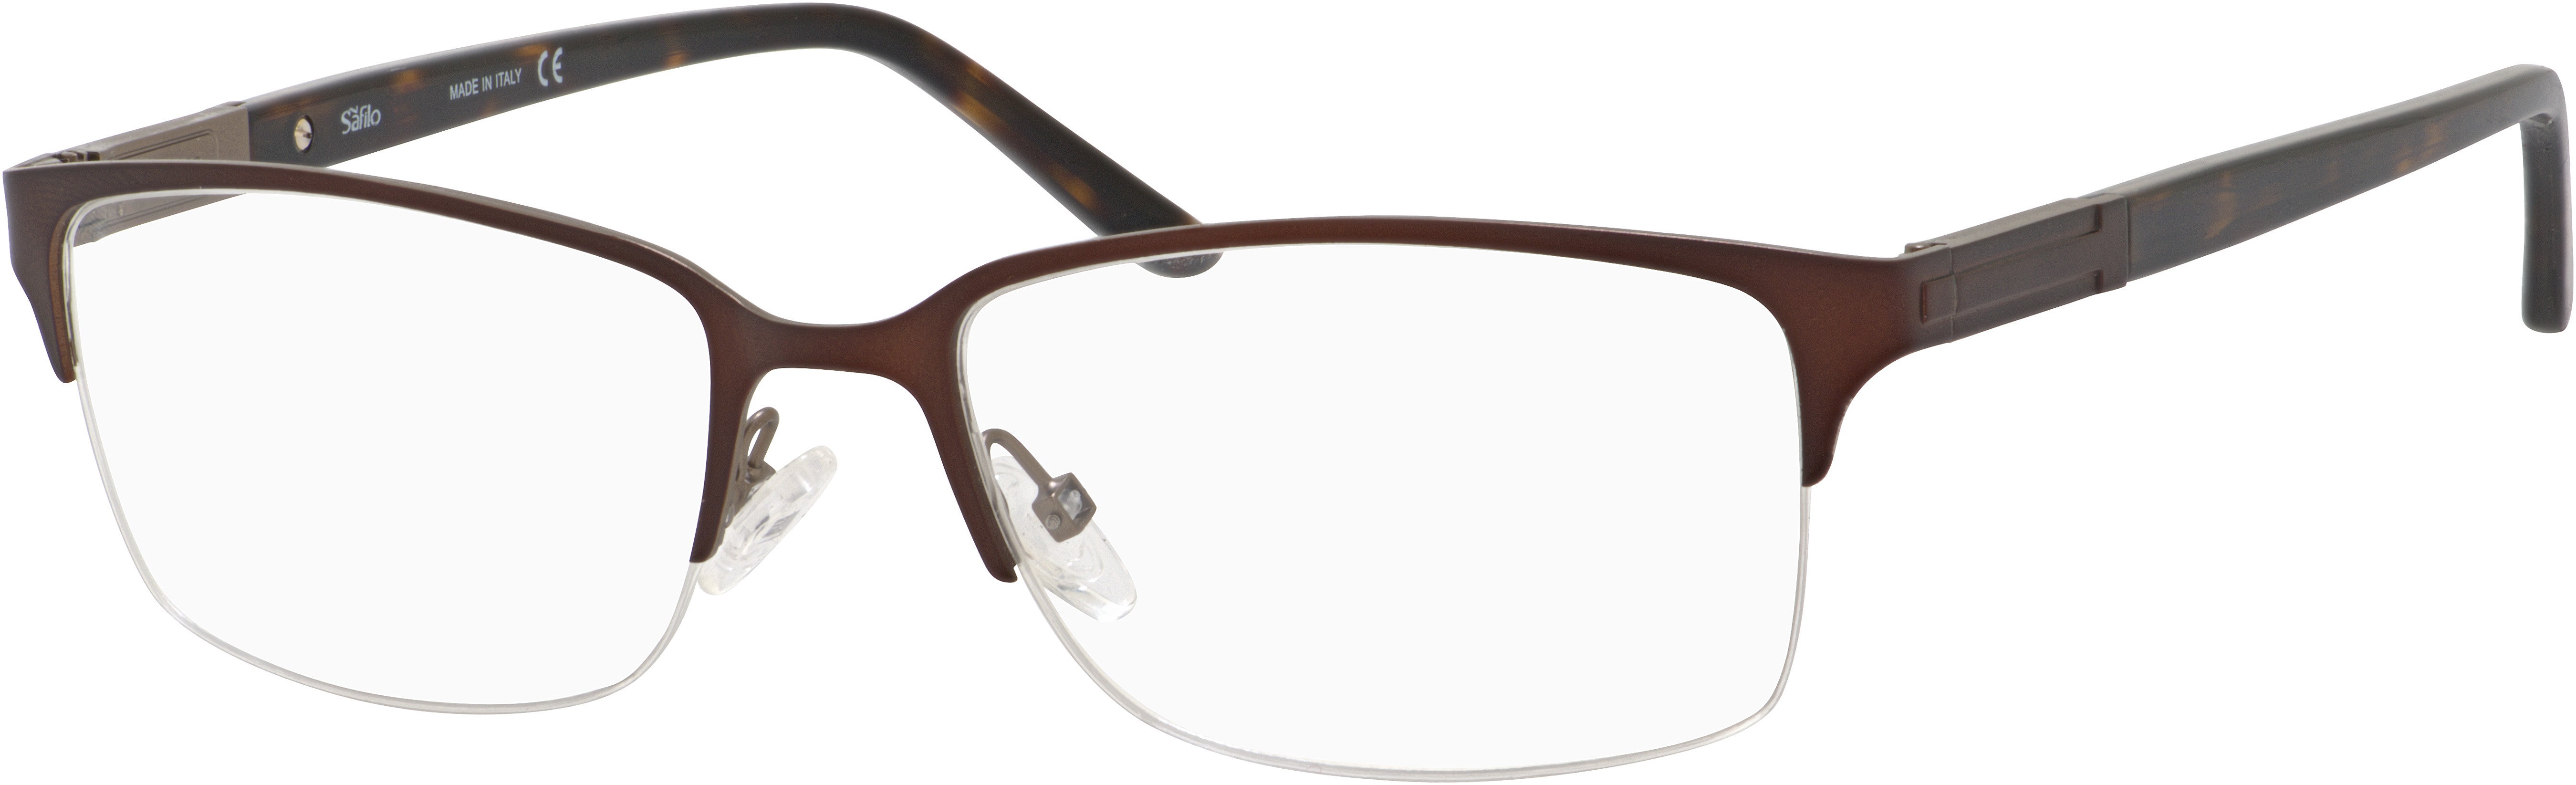  Elasta 3117 Rectangular Eyeglasses 009Q-009Q  Brown (00 Demo Lens)